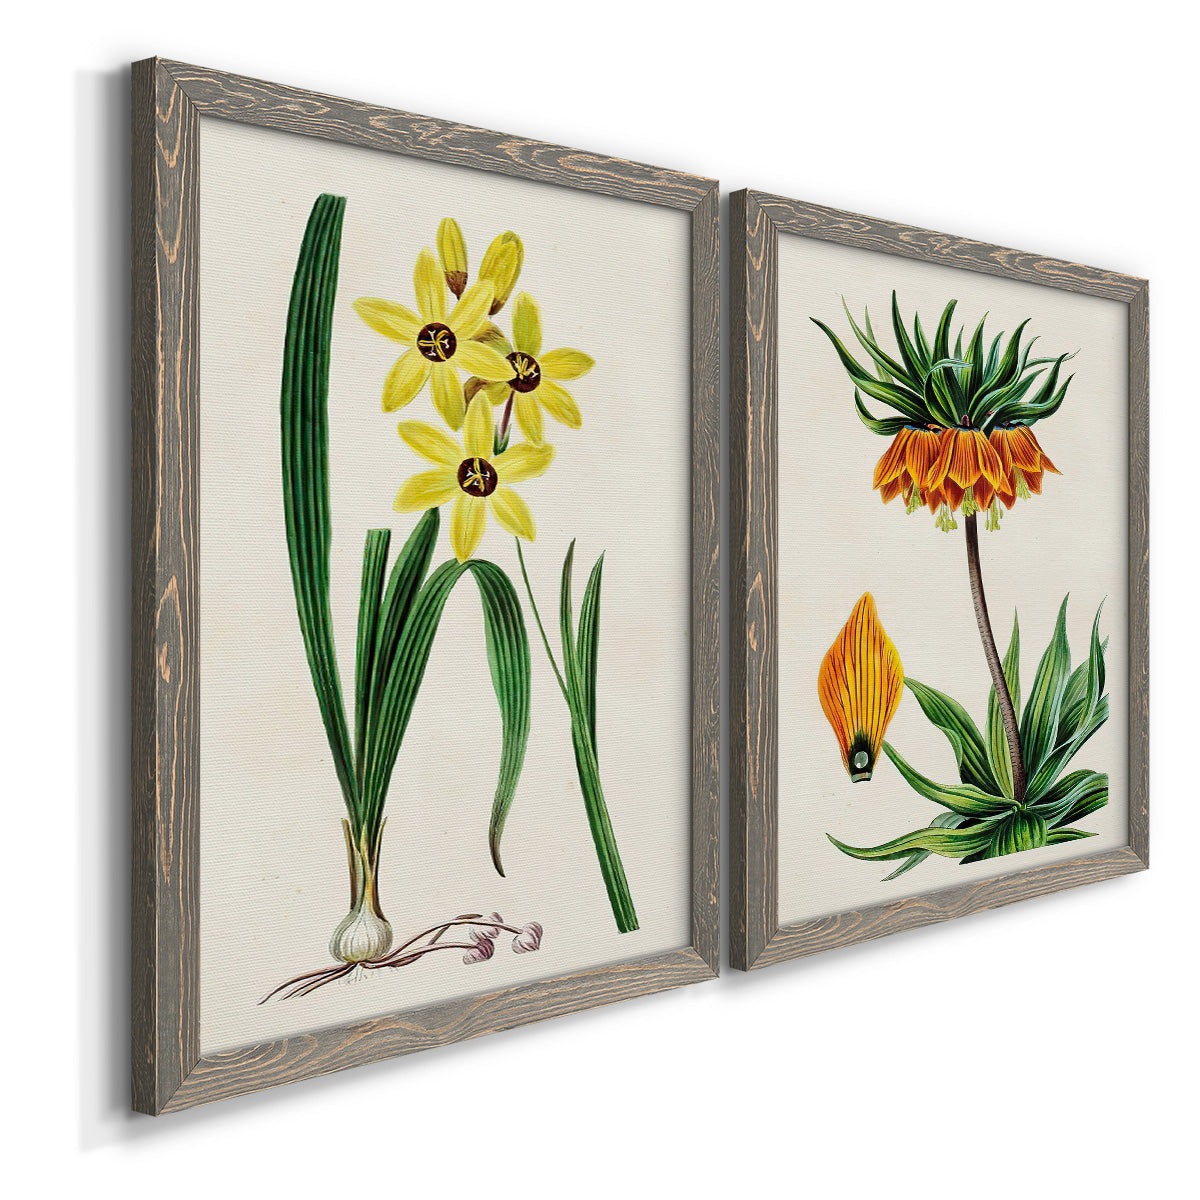 Antique Floral Folio VI - Premium Framed Canvas 2 Piece Set - Ready to Hang